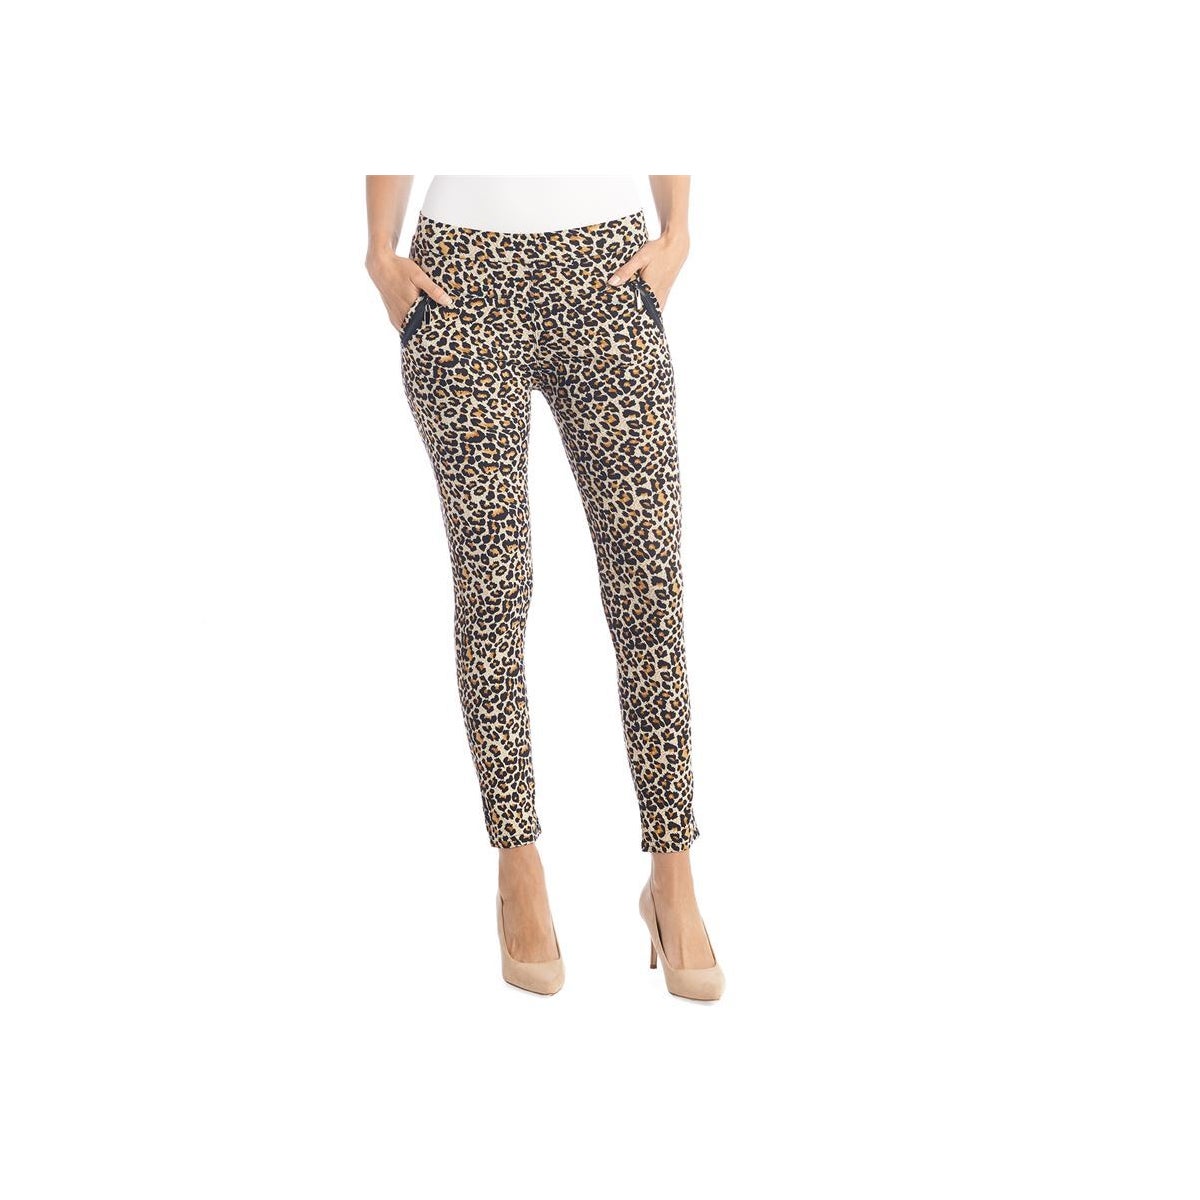 jasmine zip pocket leggings - leopard s/m